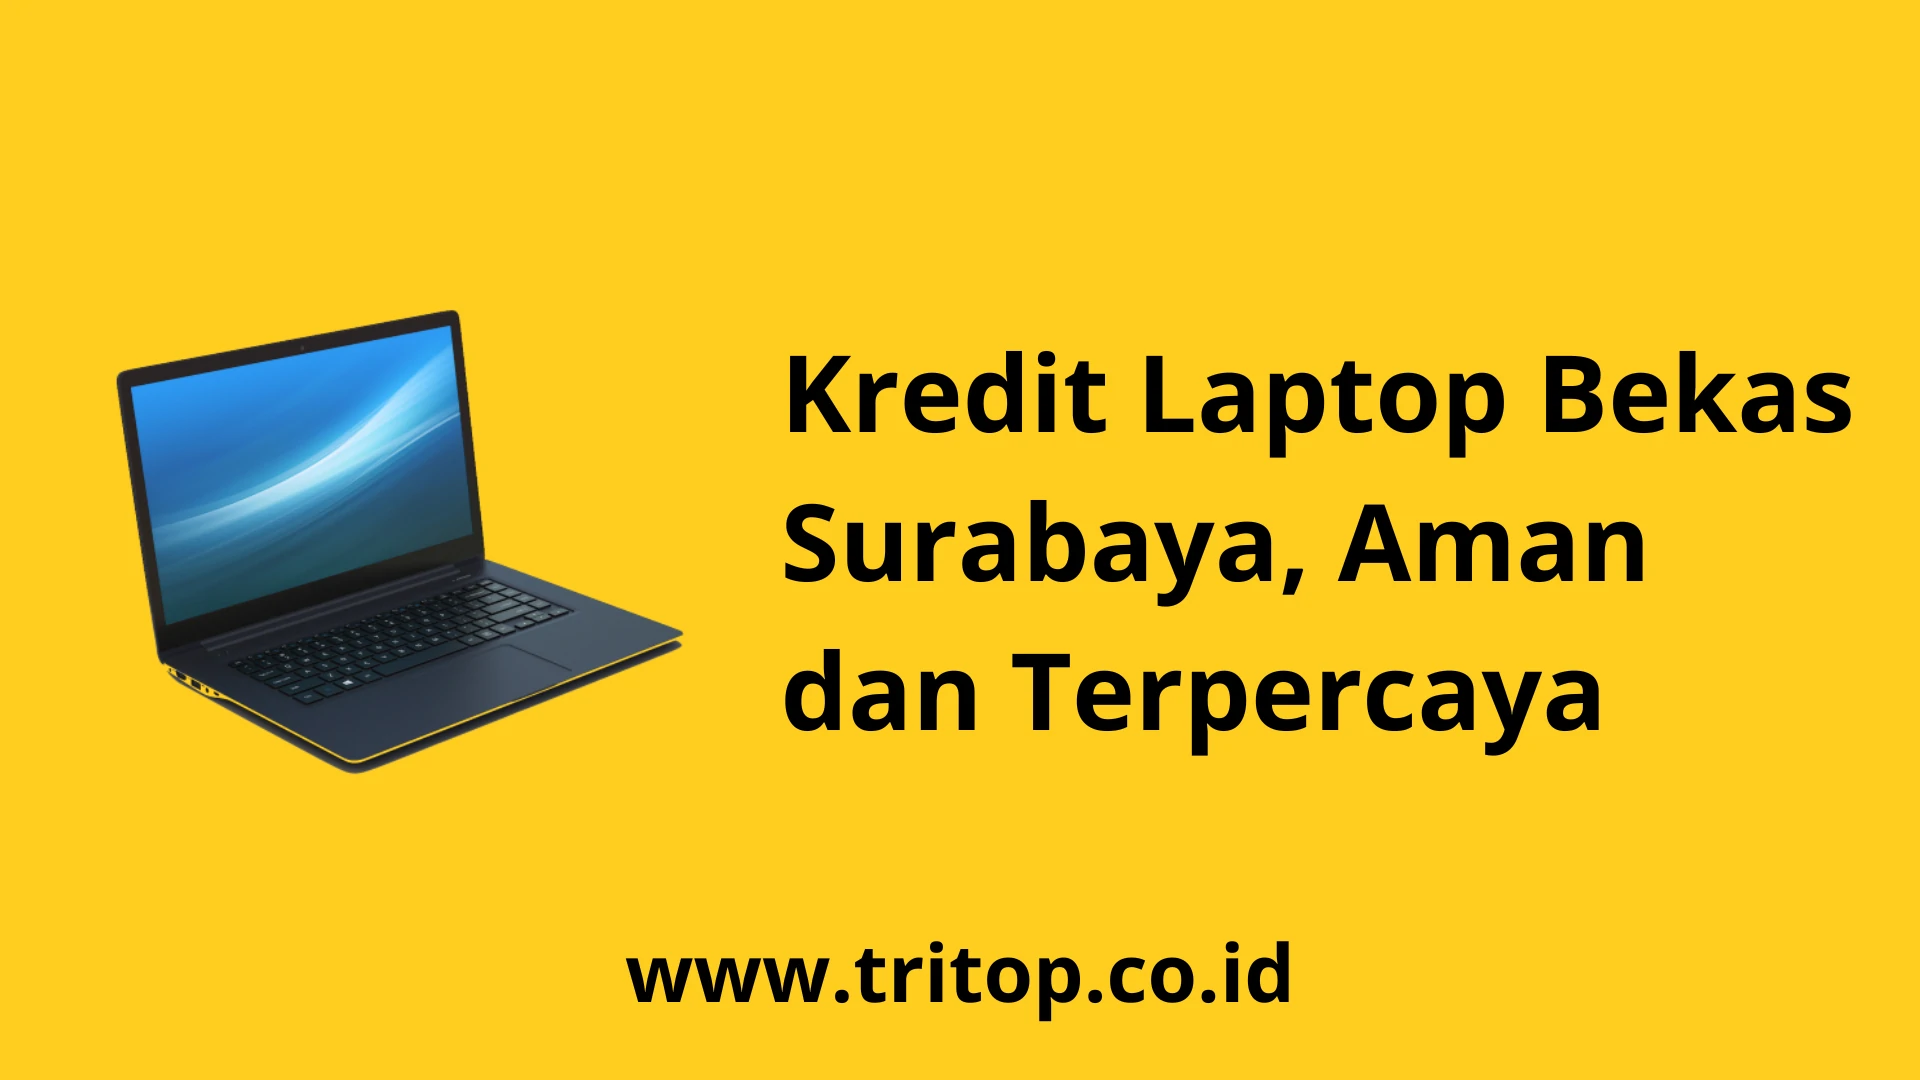 Kredit Laptop Bekas Surabaya www.tritop.co.id